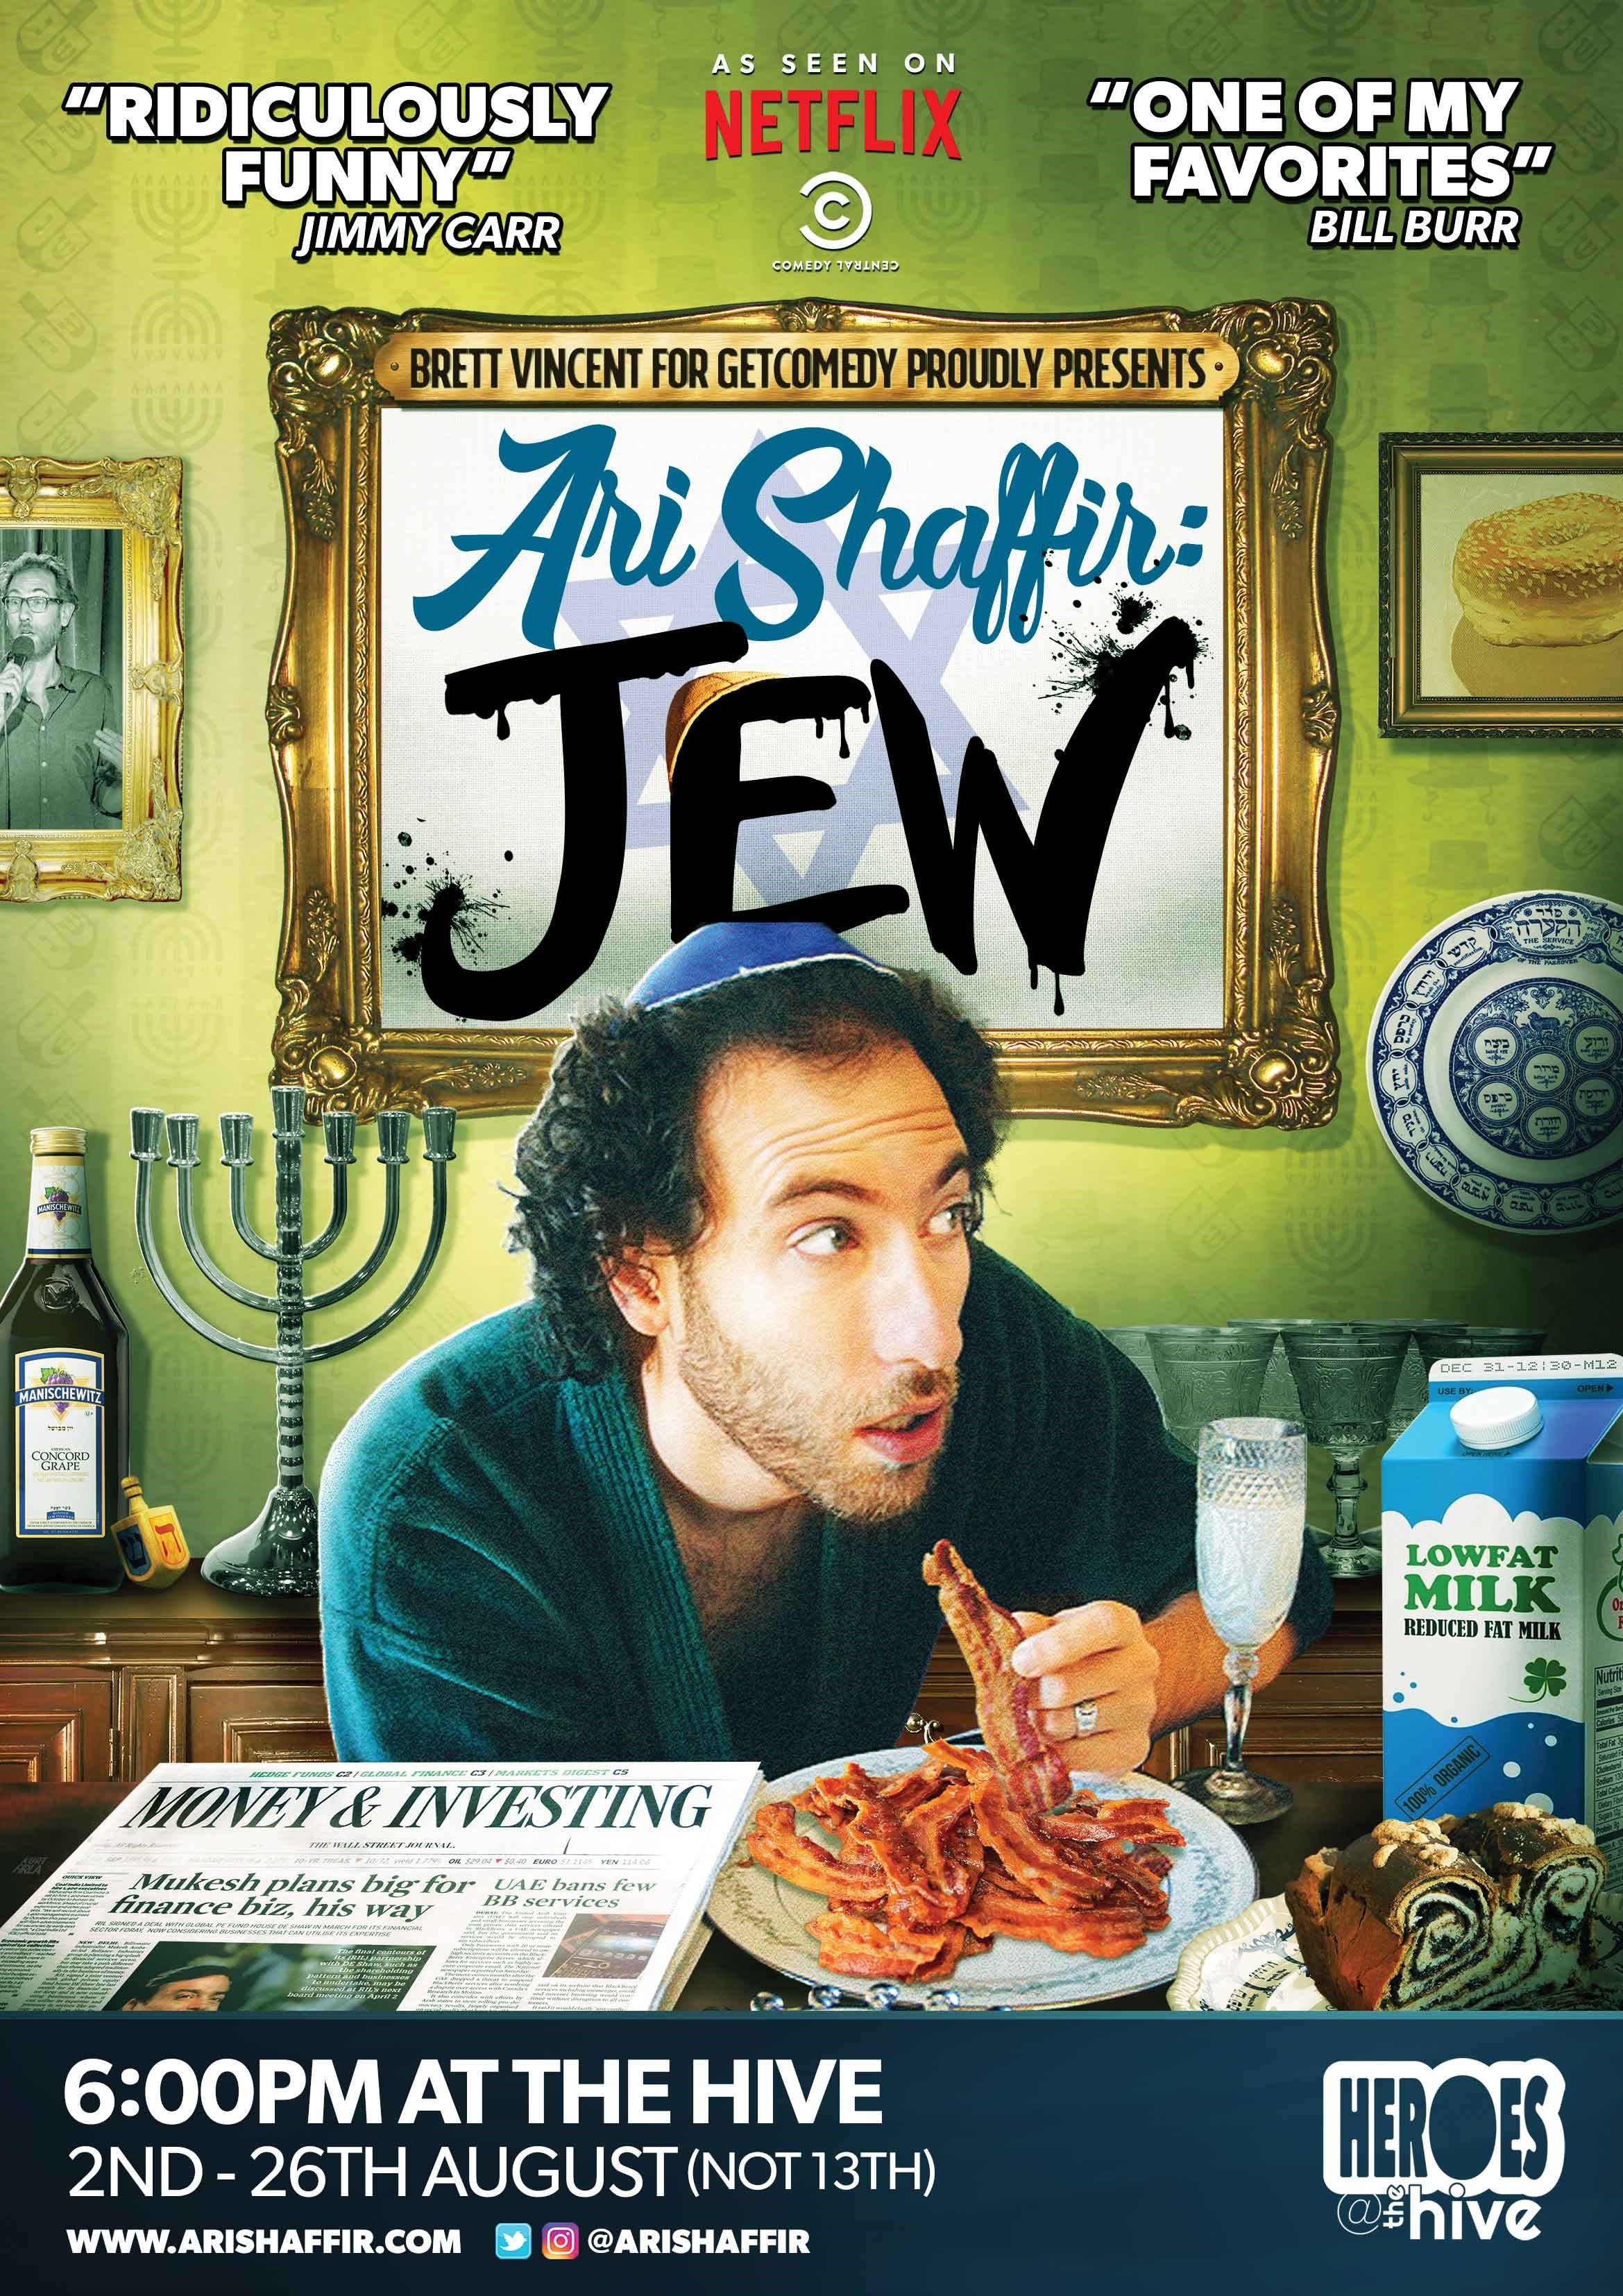 The poster for Ari Shaffir: Jew